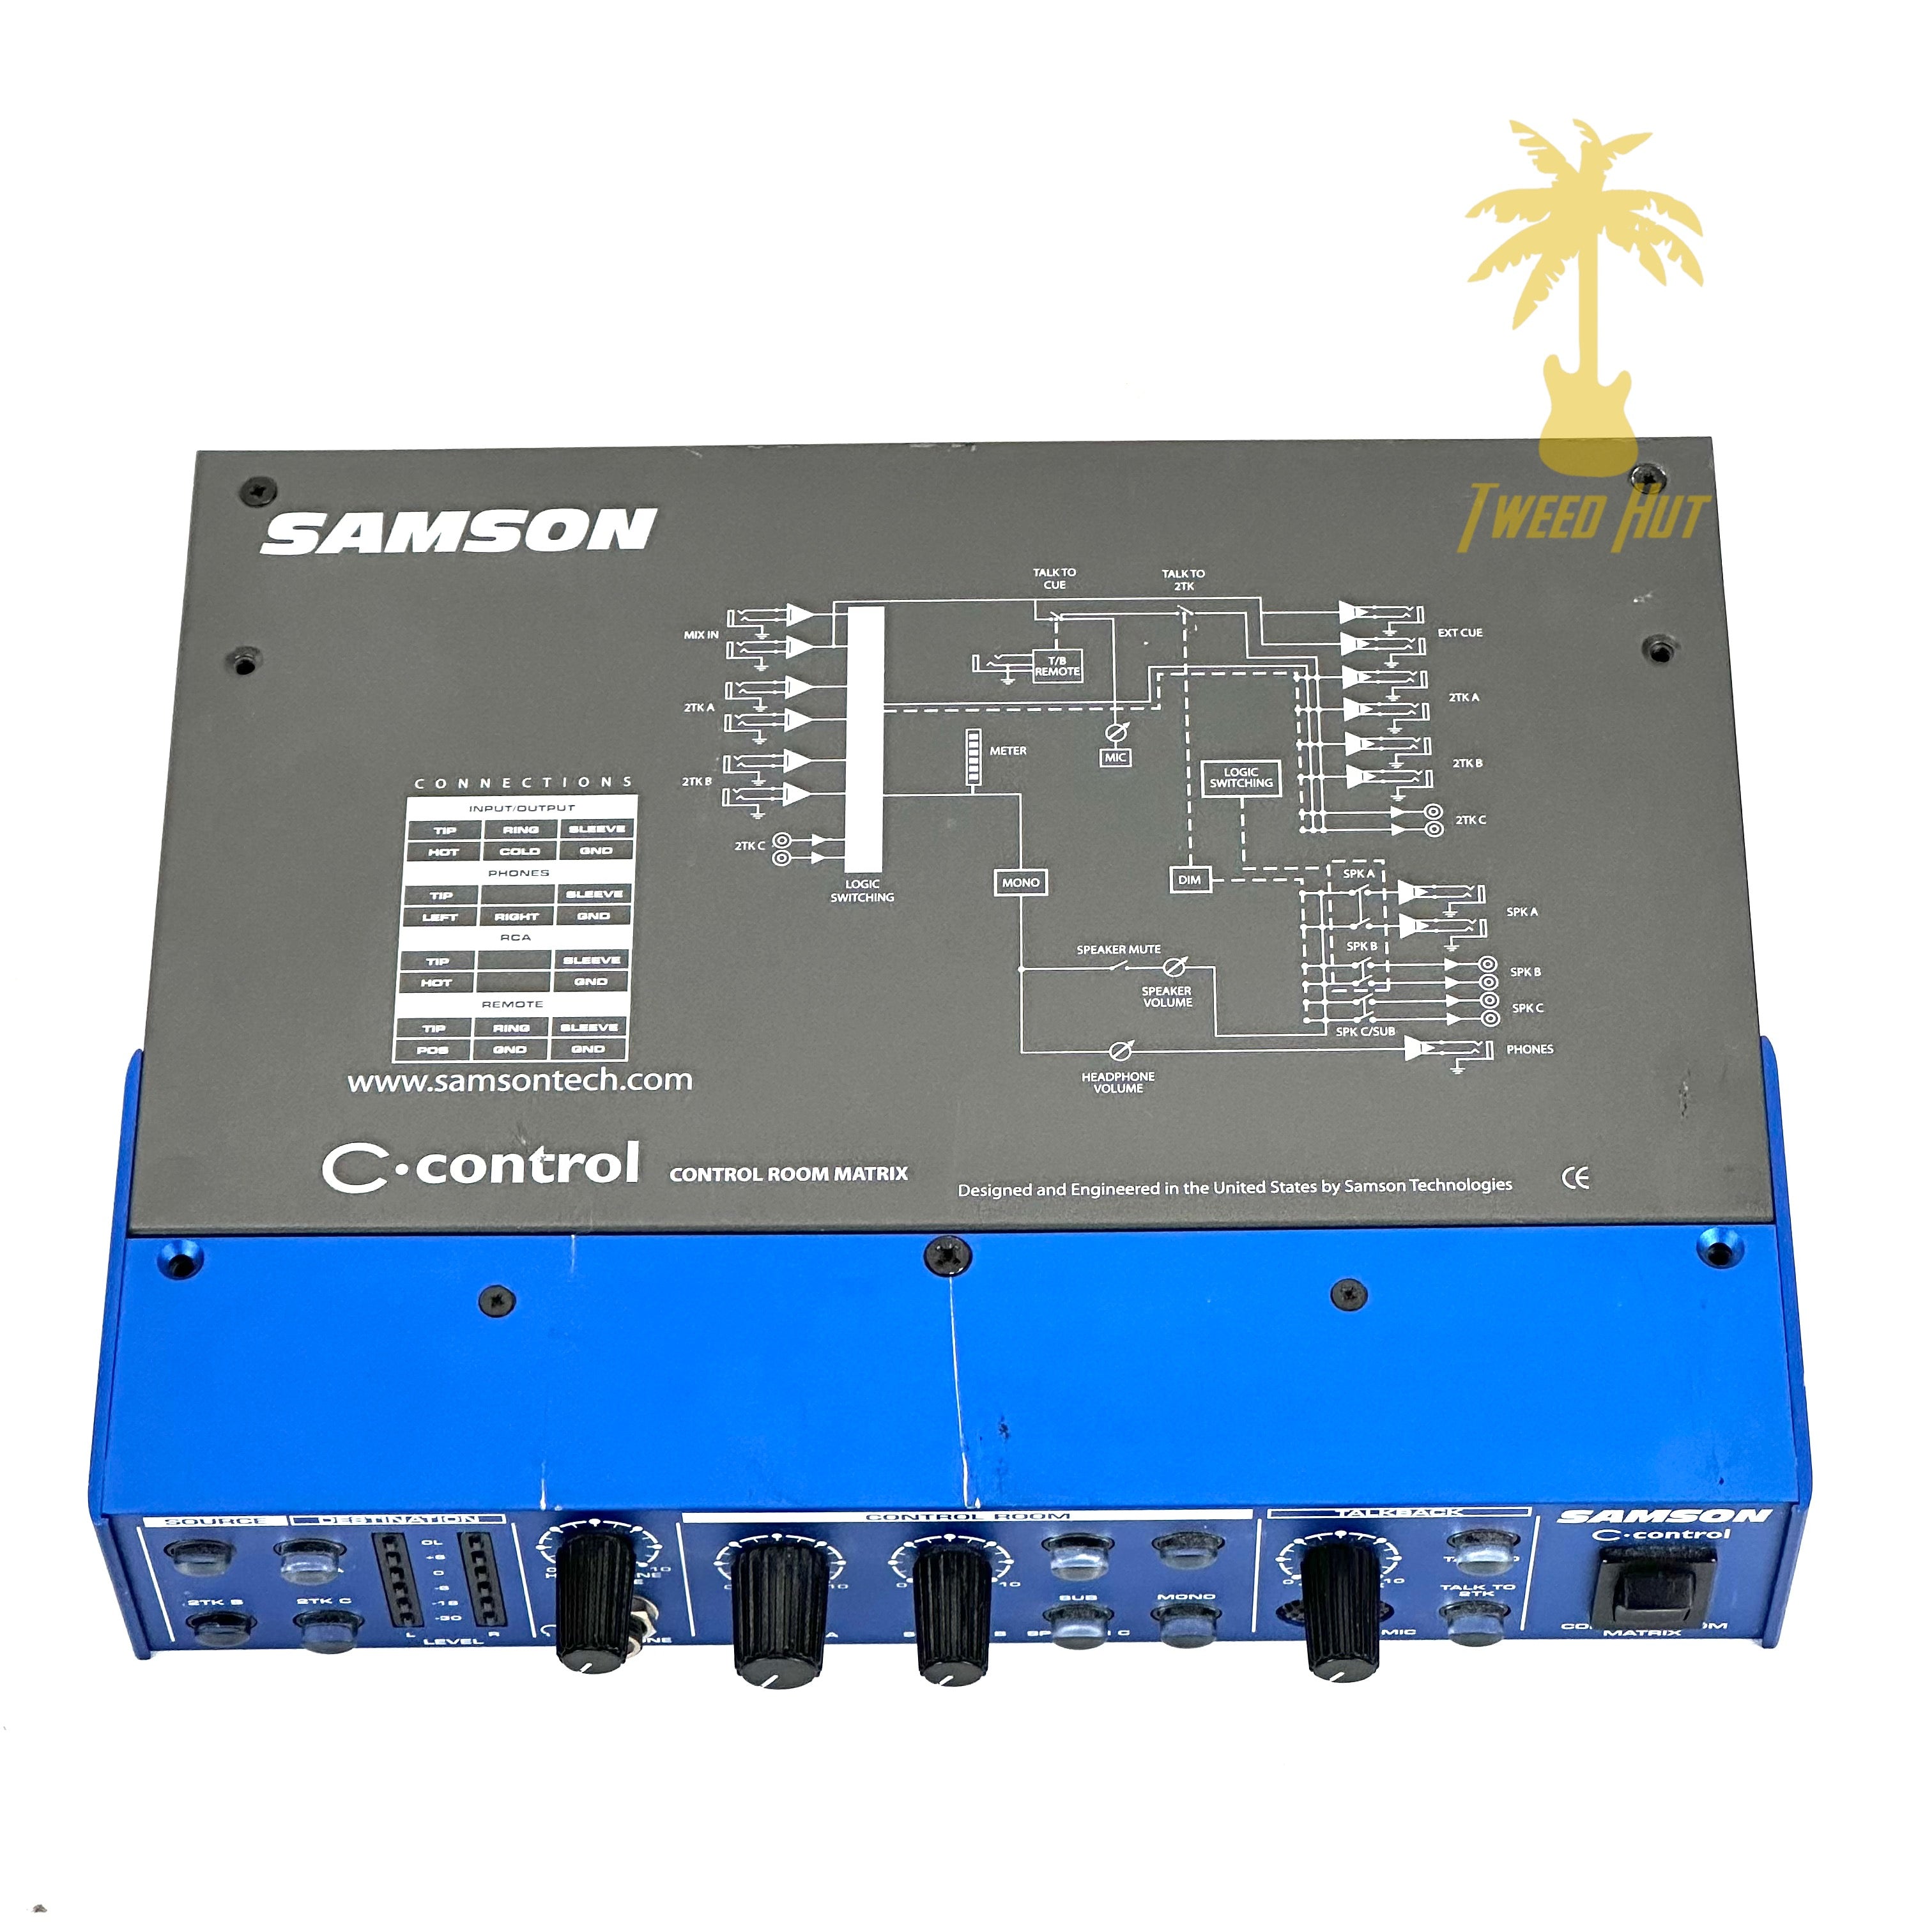 SAMSON C-CONTROL CONTROL ROOM MATRIX